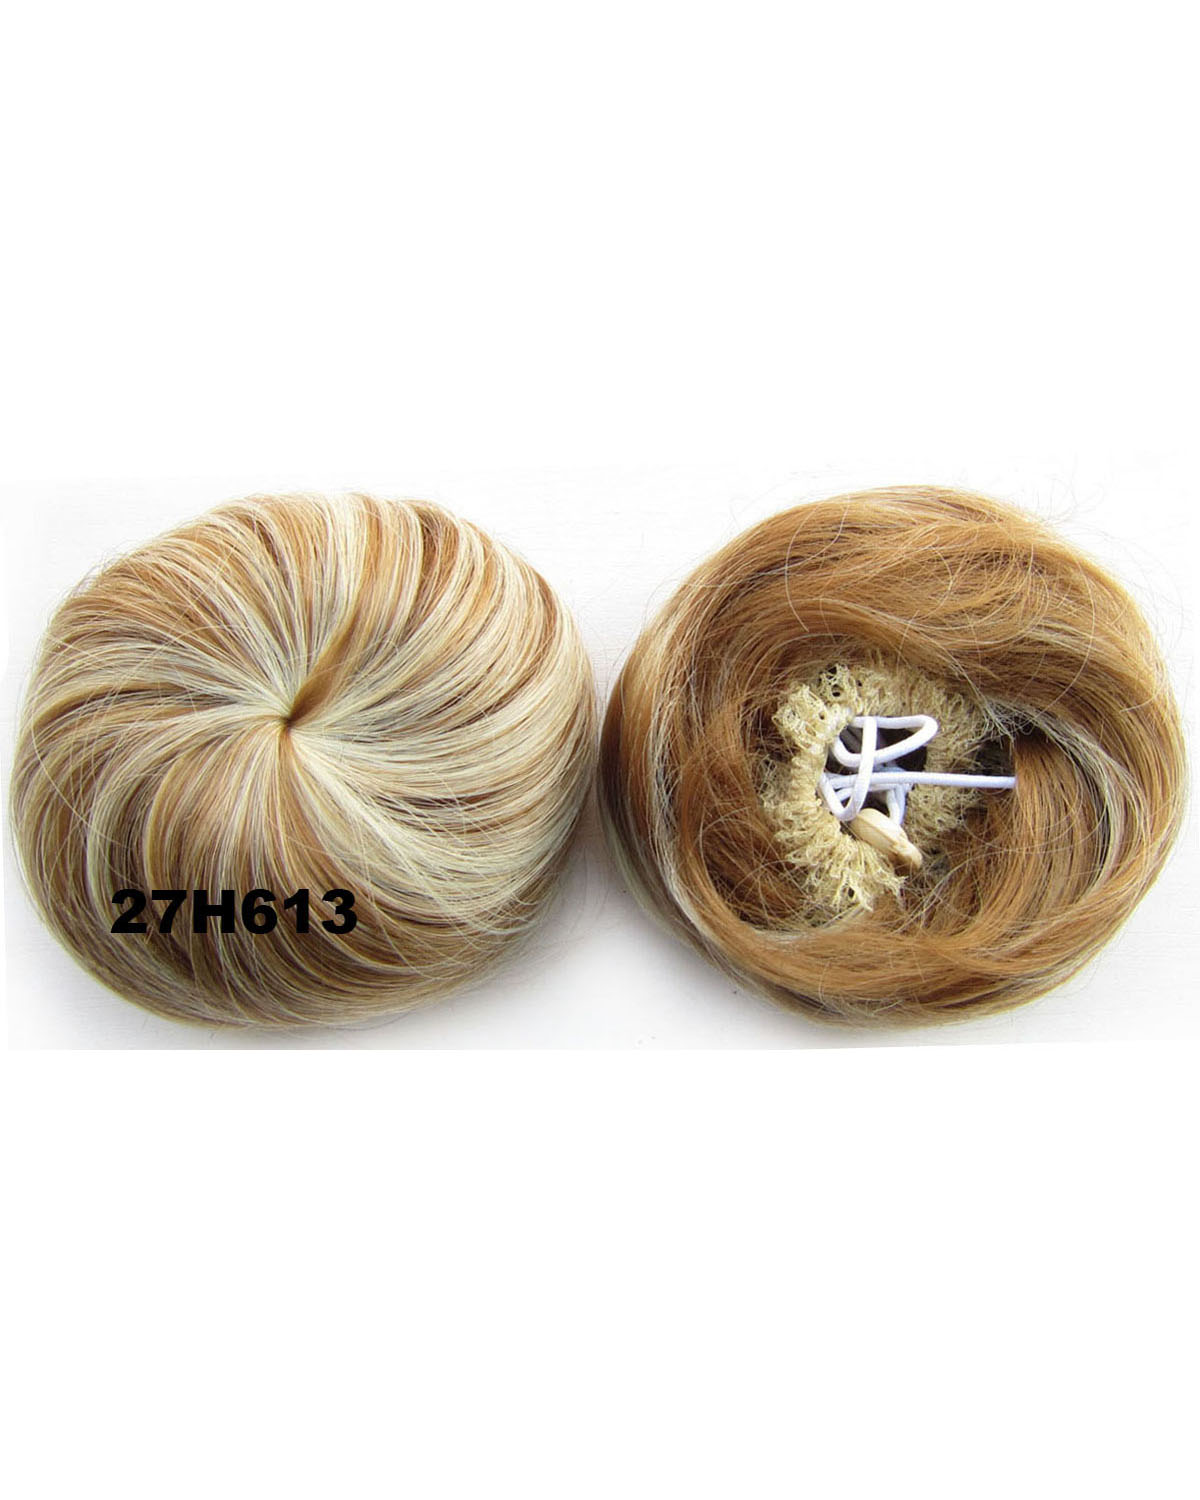 Ladies Clean Straight Short Hair Buns Drawstring Synthetic Hair Extension Bride Scrunchies27H613